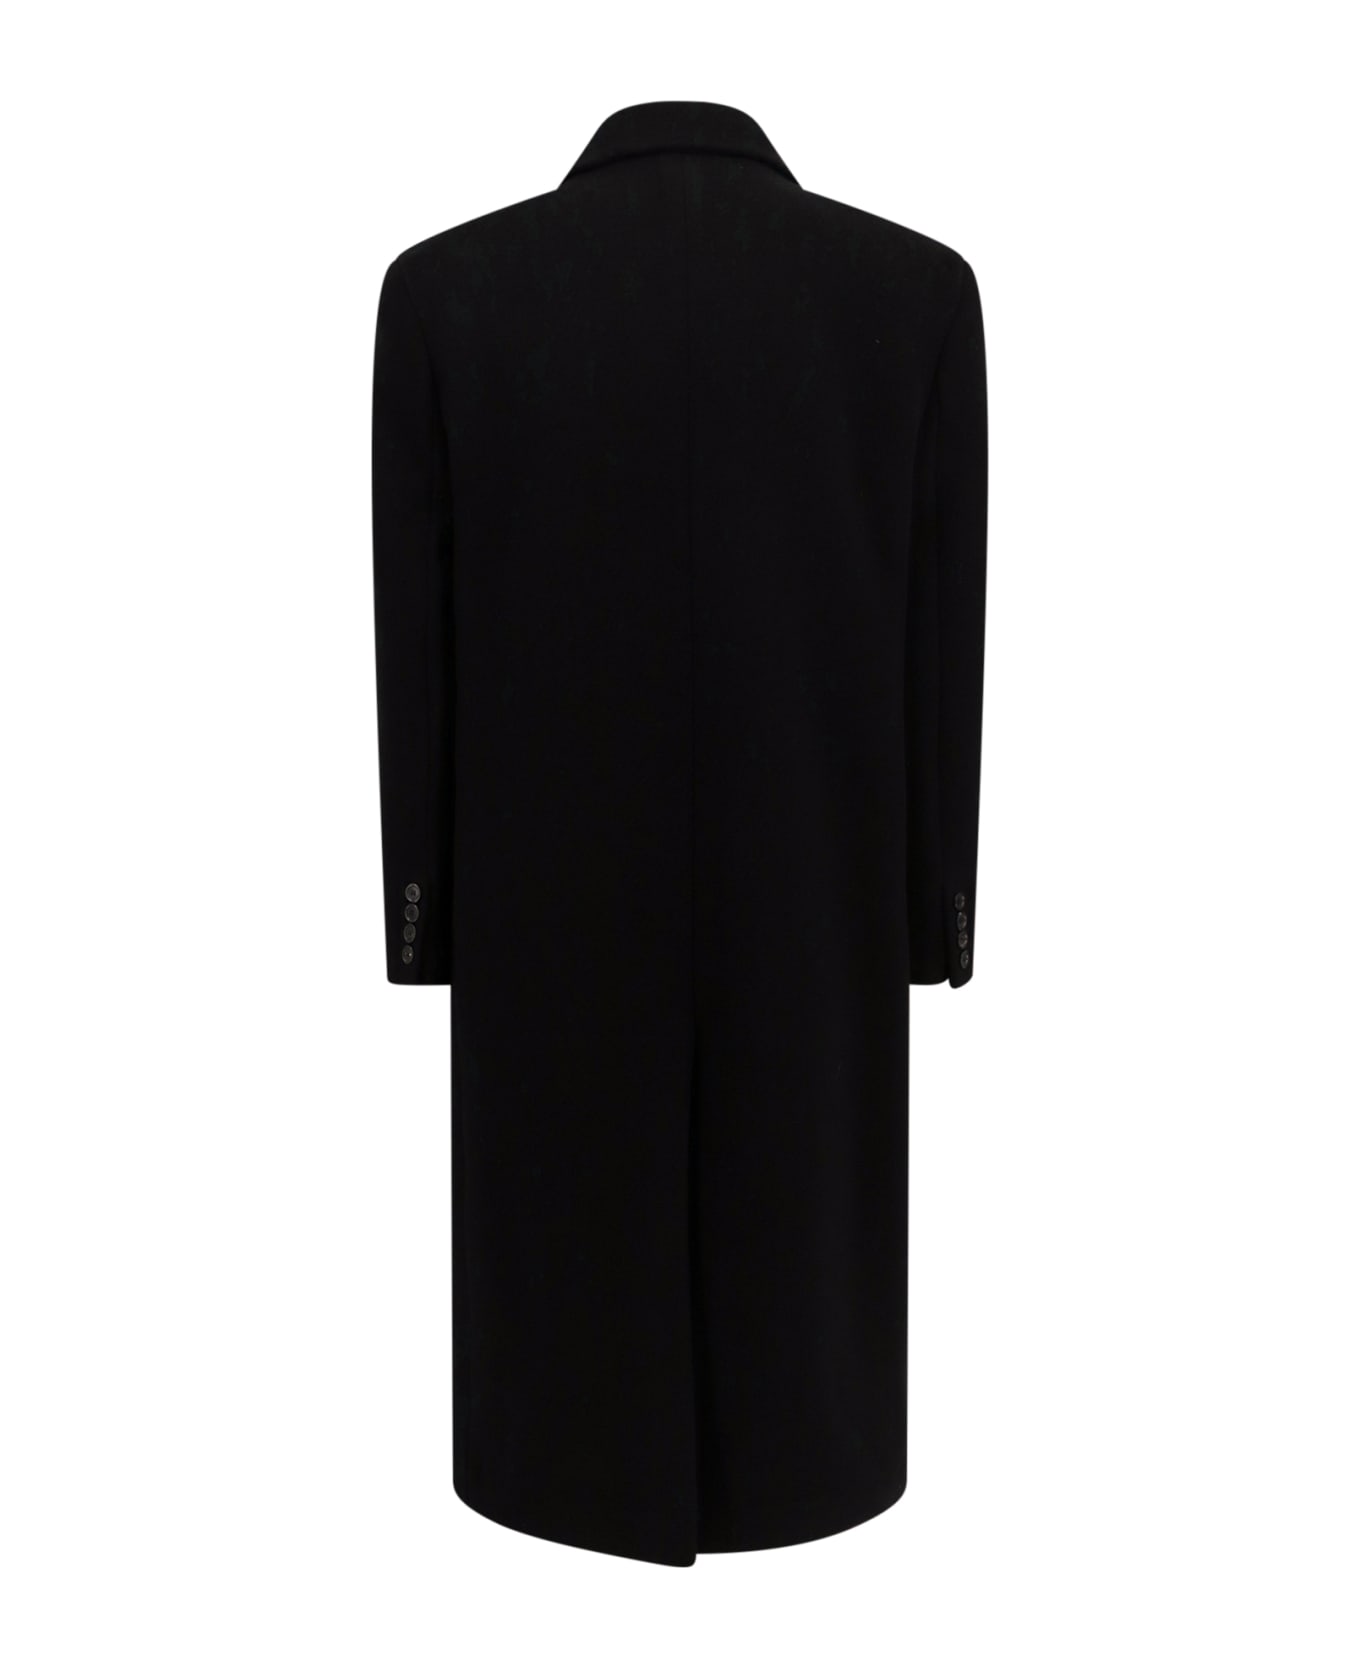 Saint Laurent Coat - Black